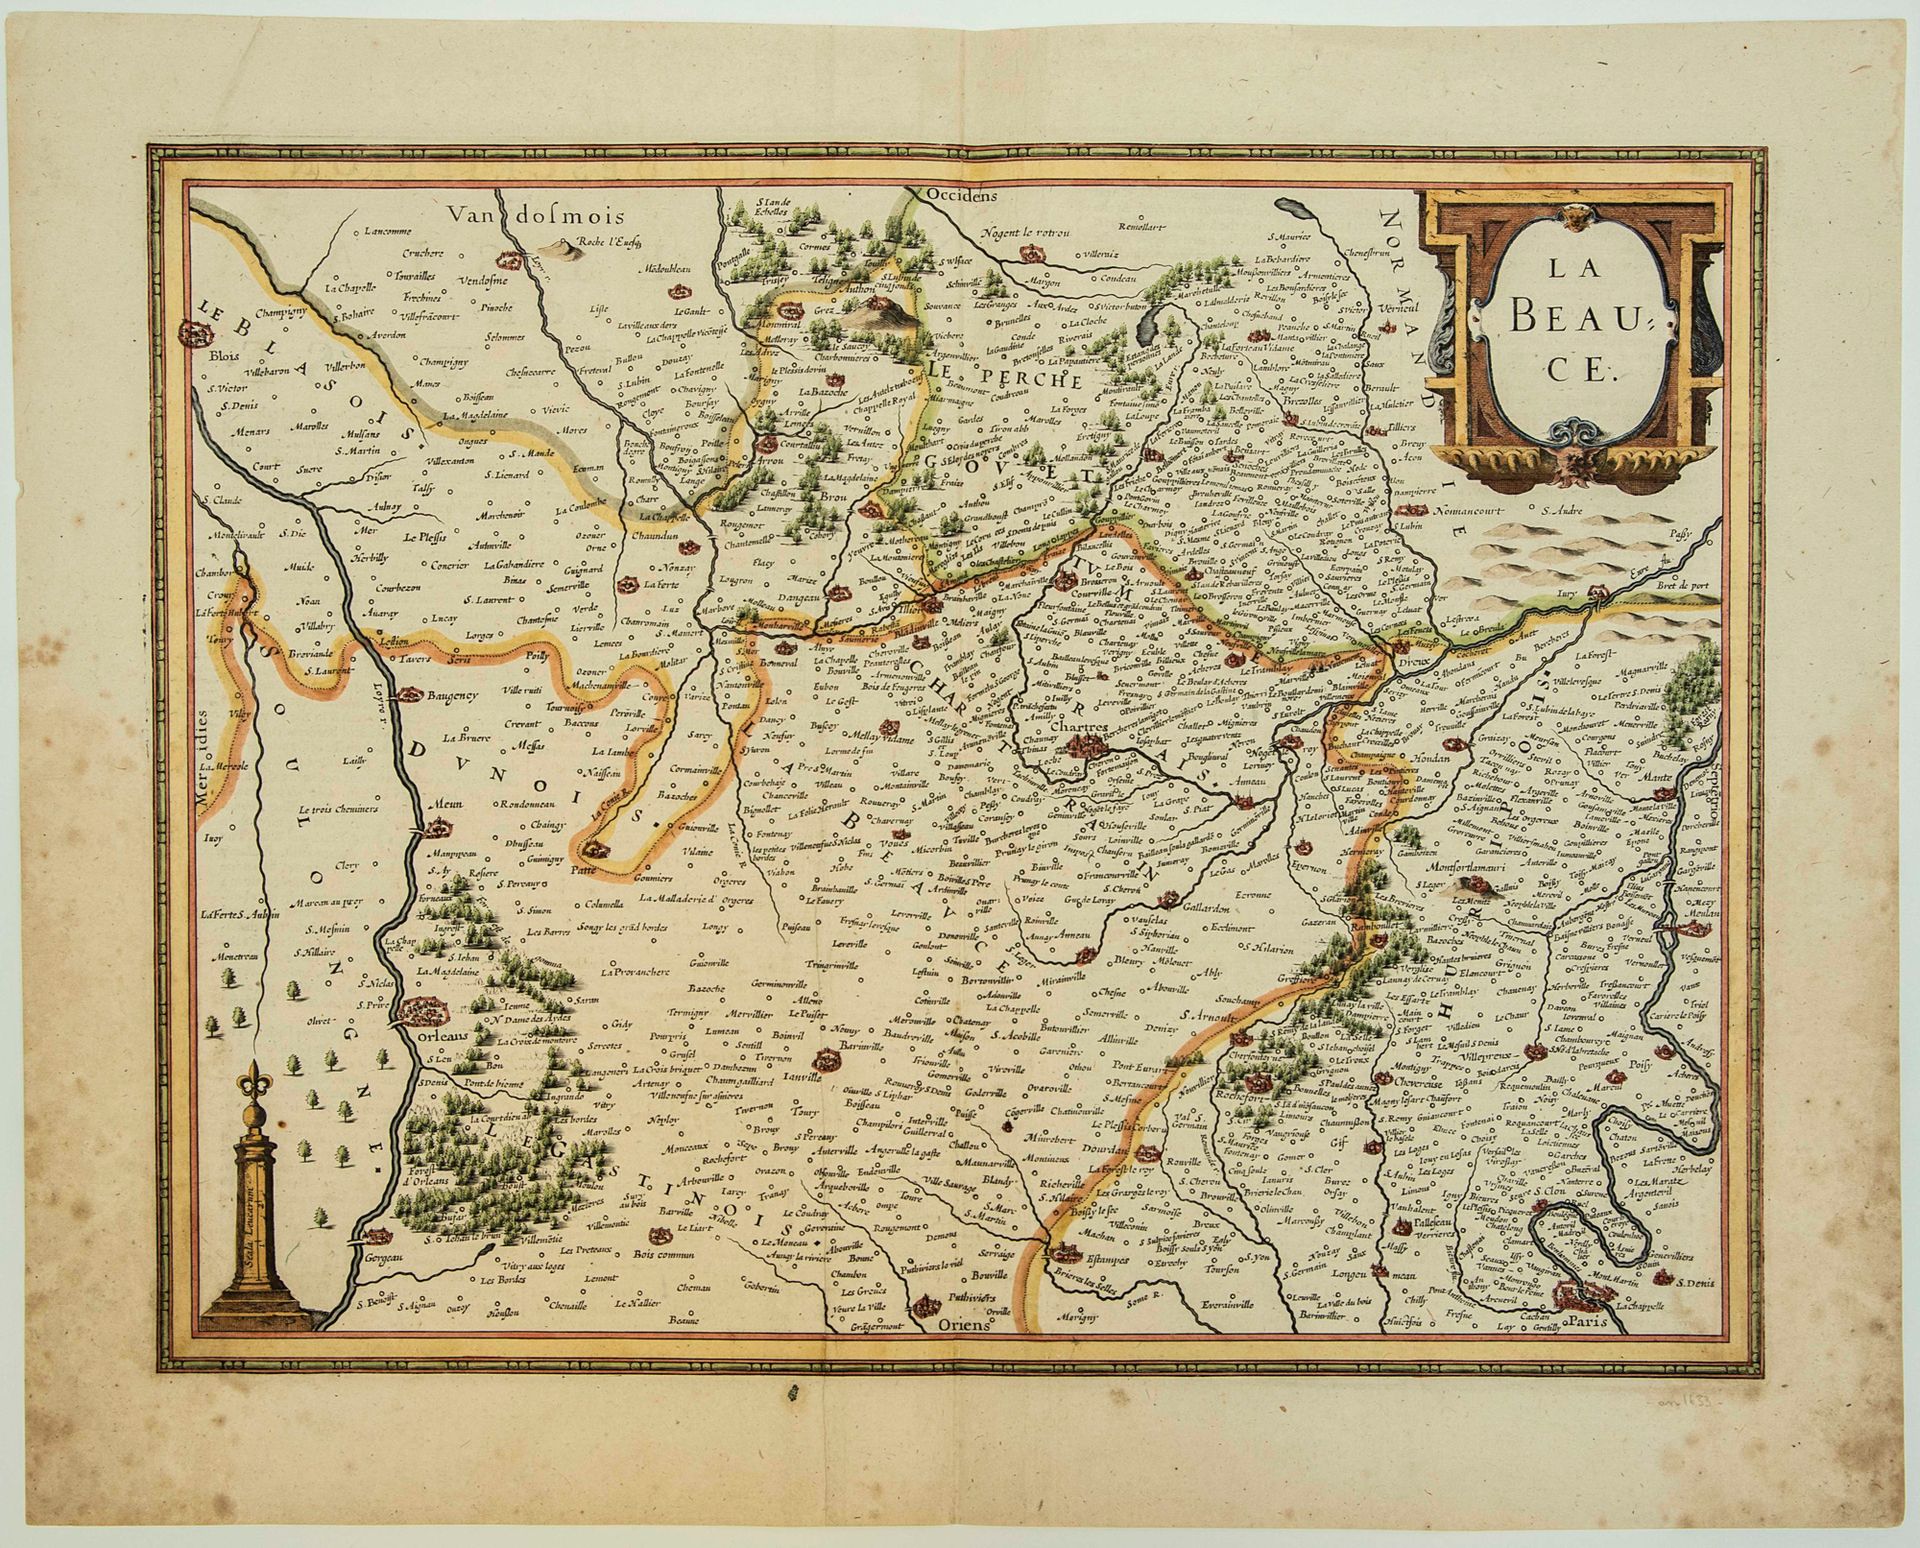 Null Jahrhundert: "LA BEAUCE" c. 1633 (Orléans, Chartres, Etampes, Rochefort, Pa&hellip;